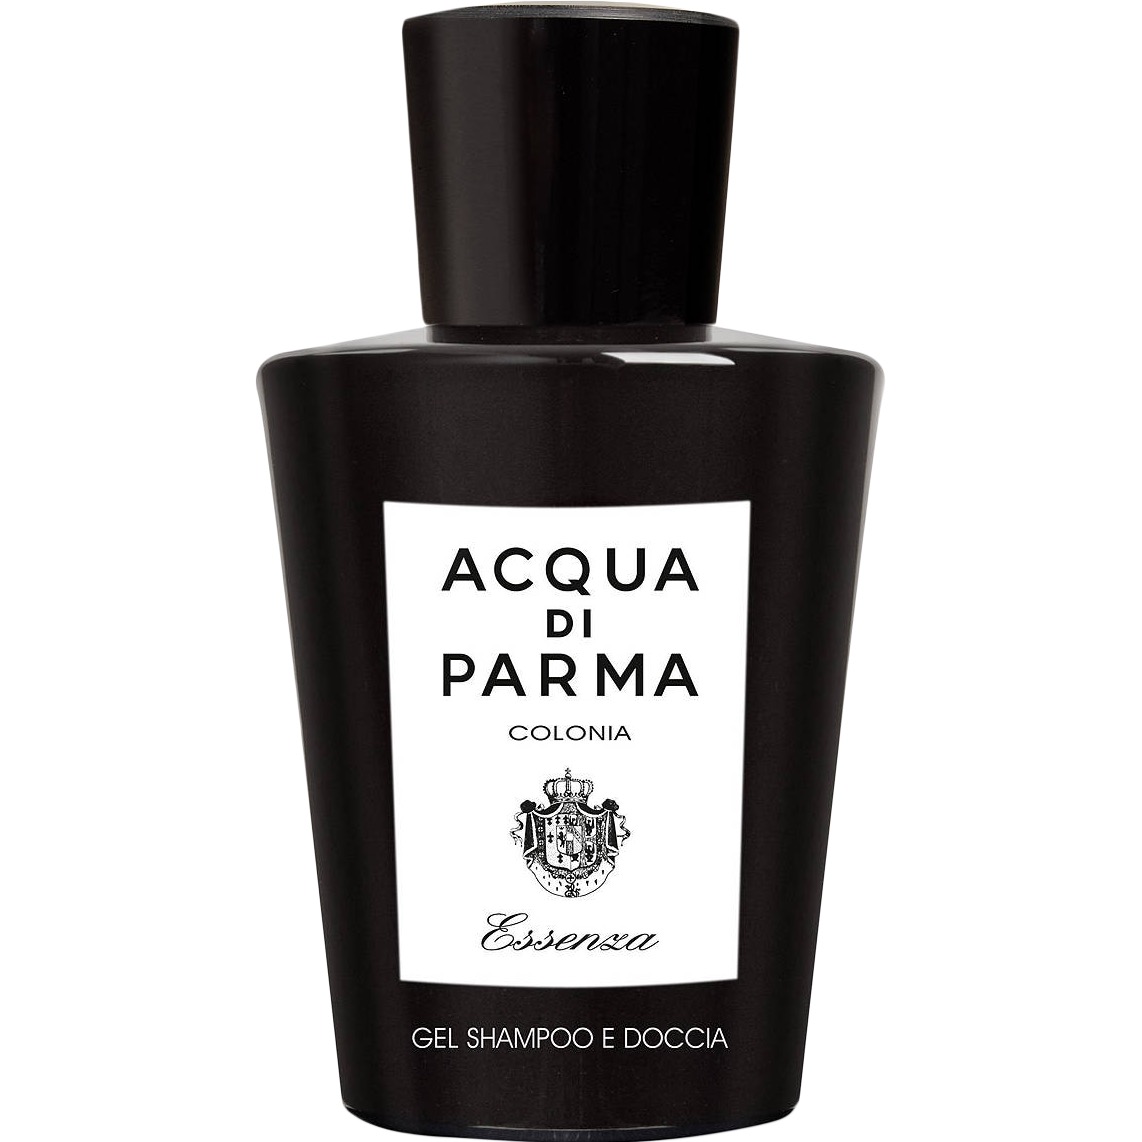 Acqua di Parma Hair and Shower gel Essenza 200ml - 1.2 - AP-22020